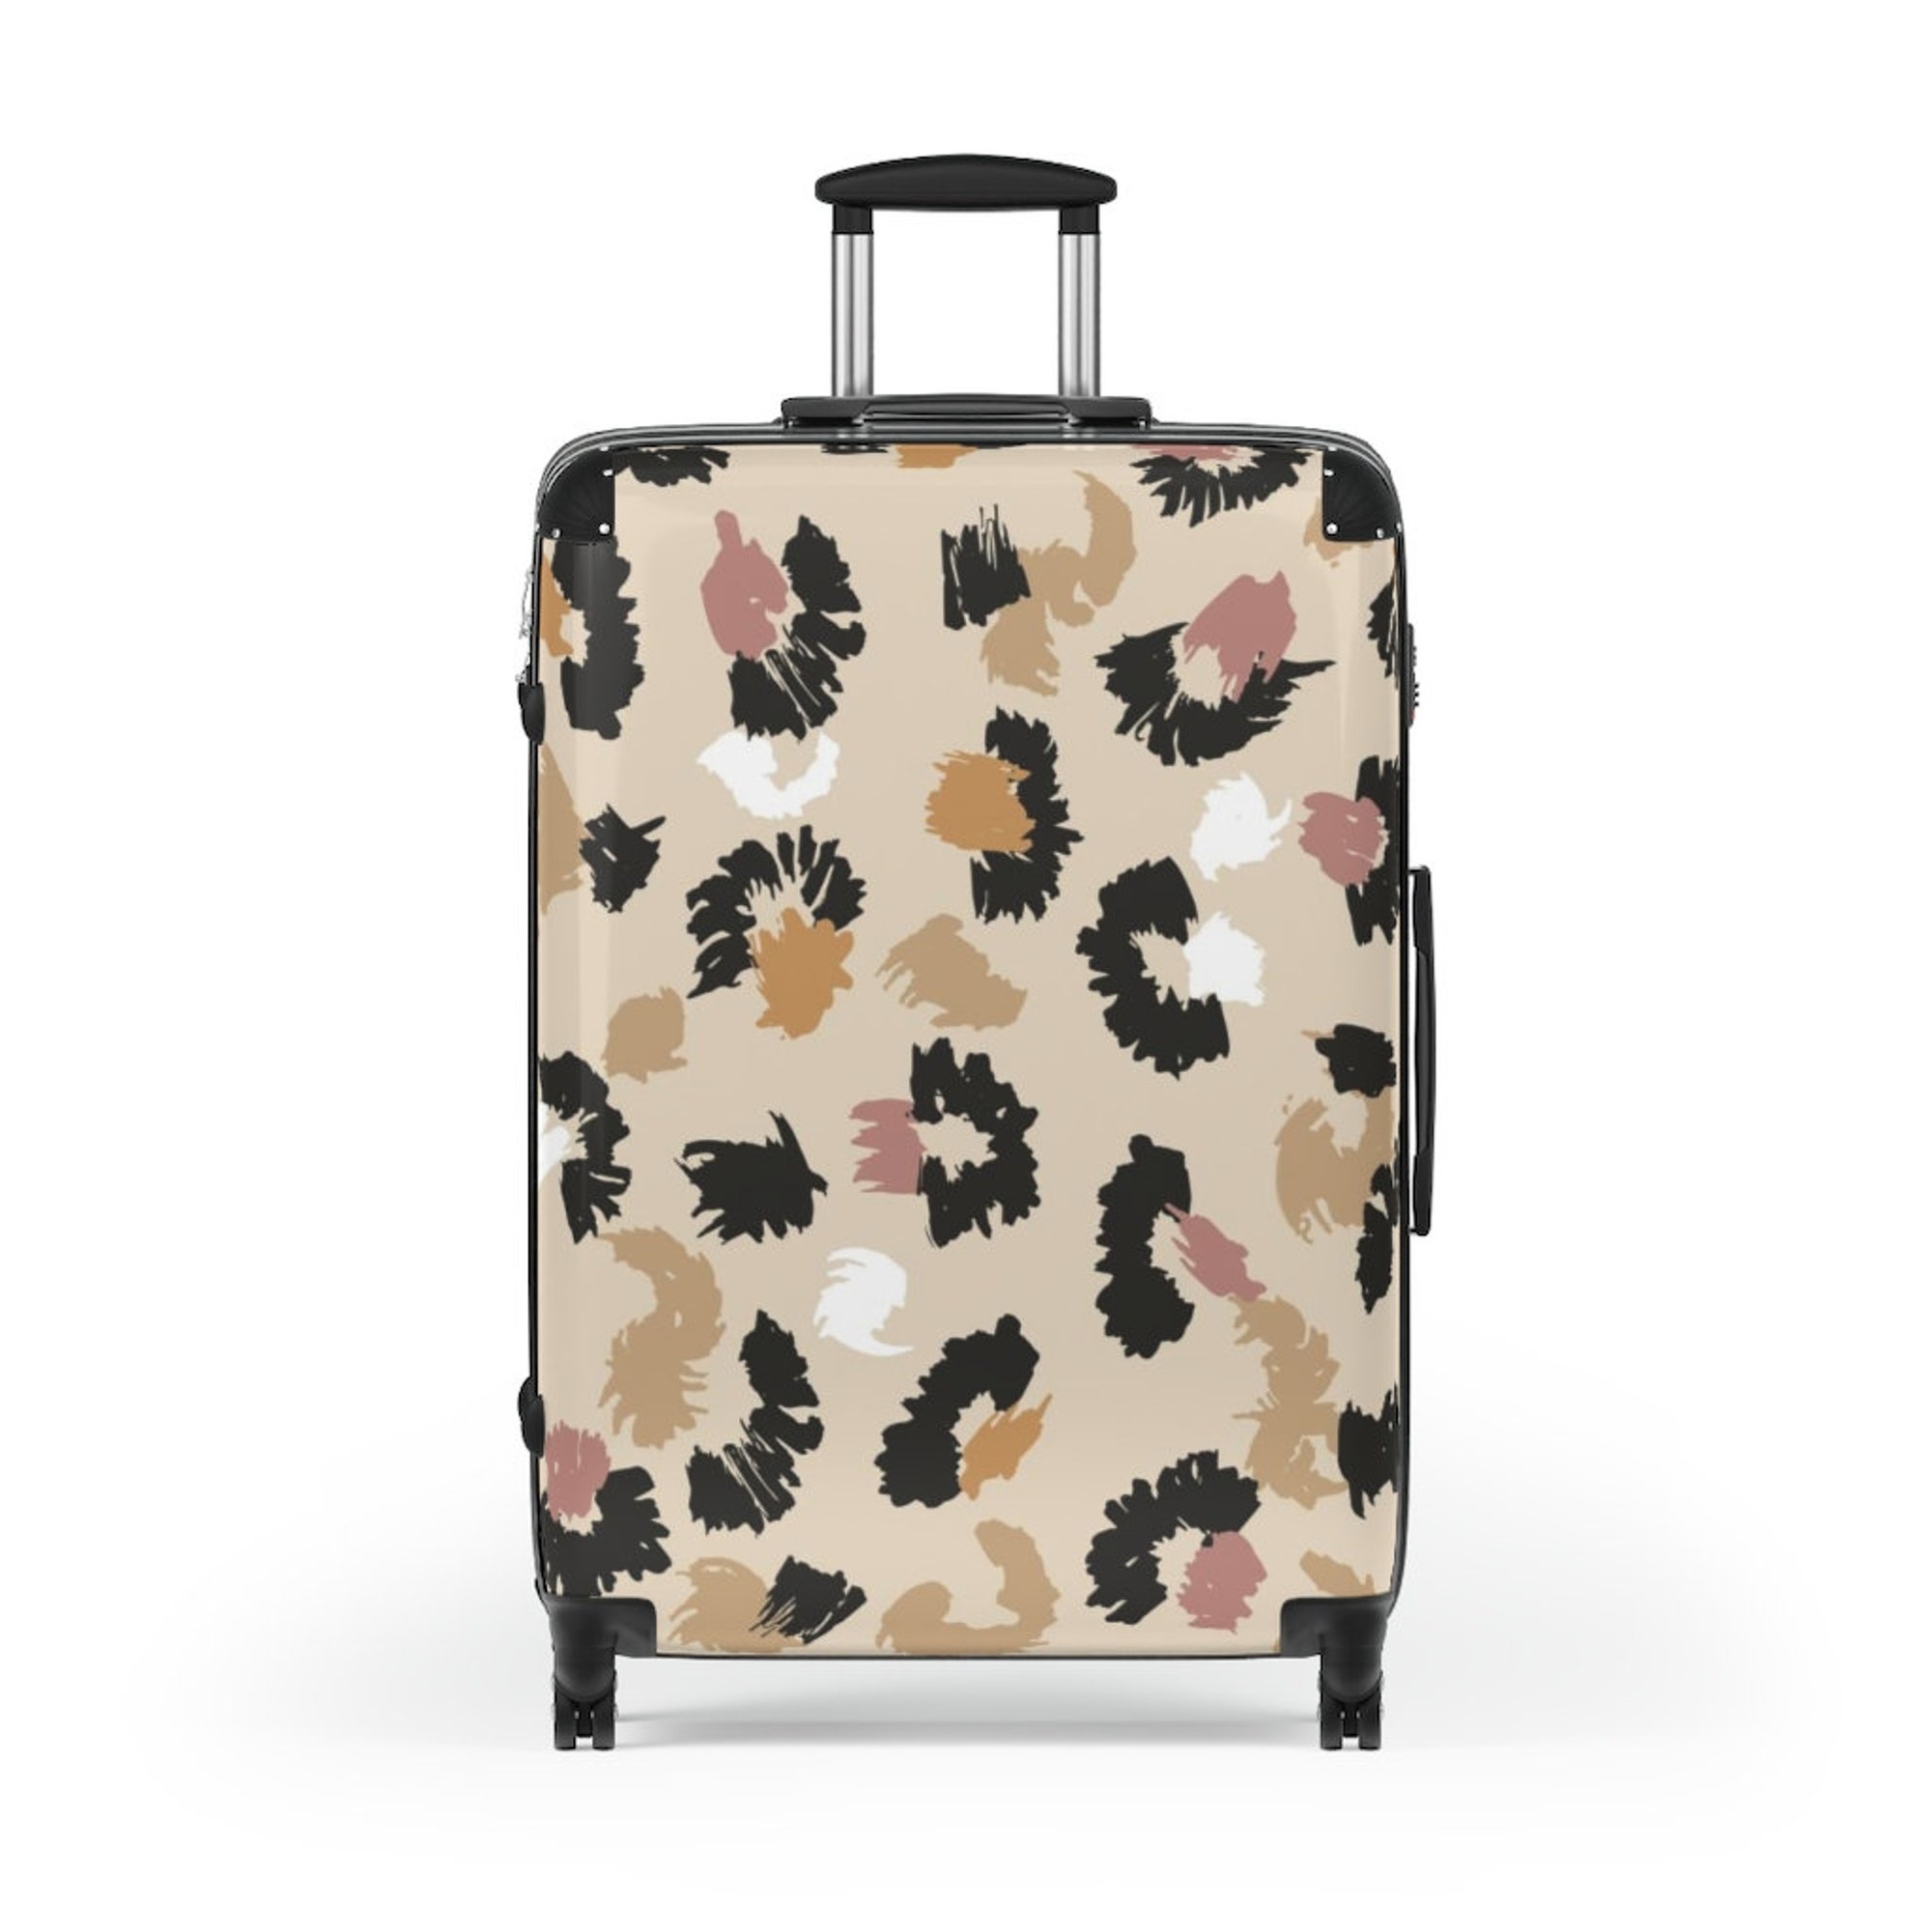 The Keita Suitcase